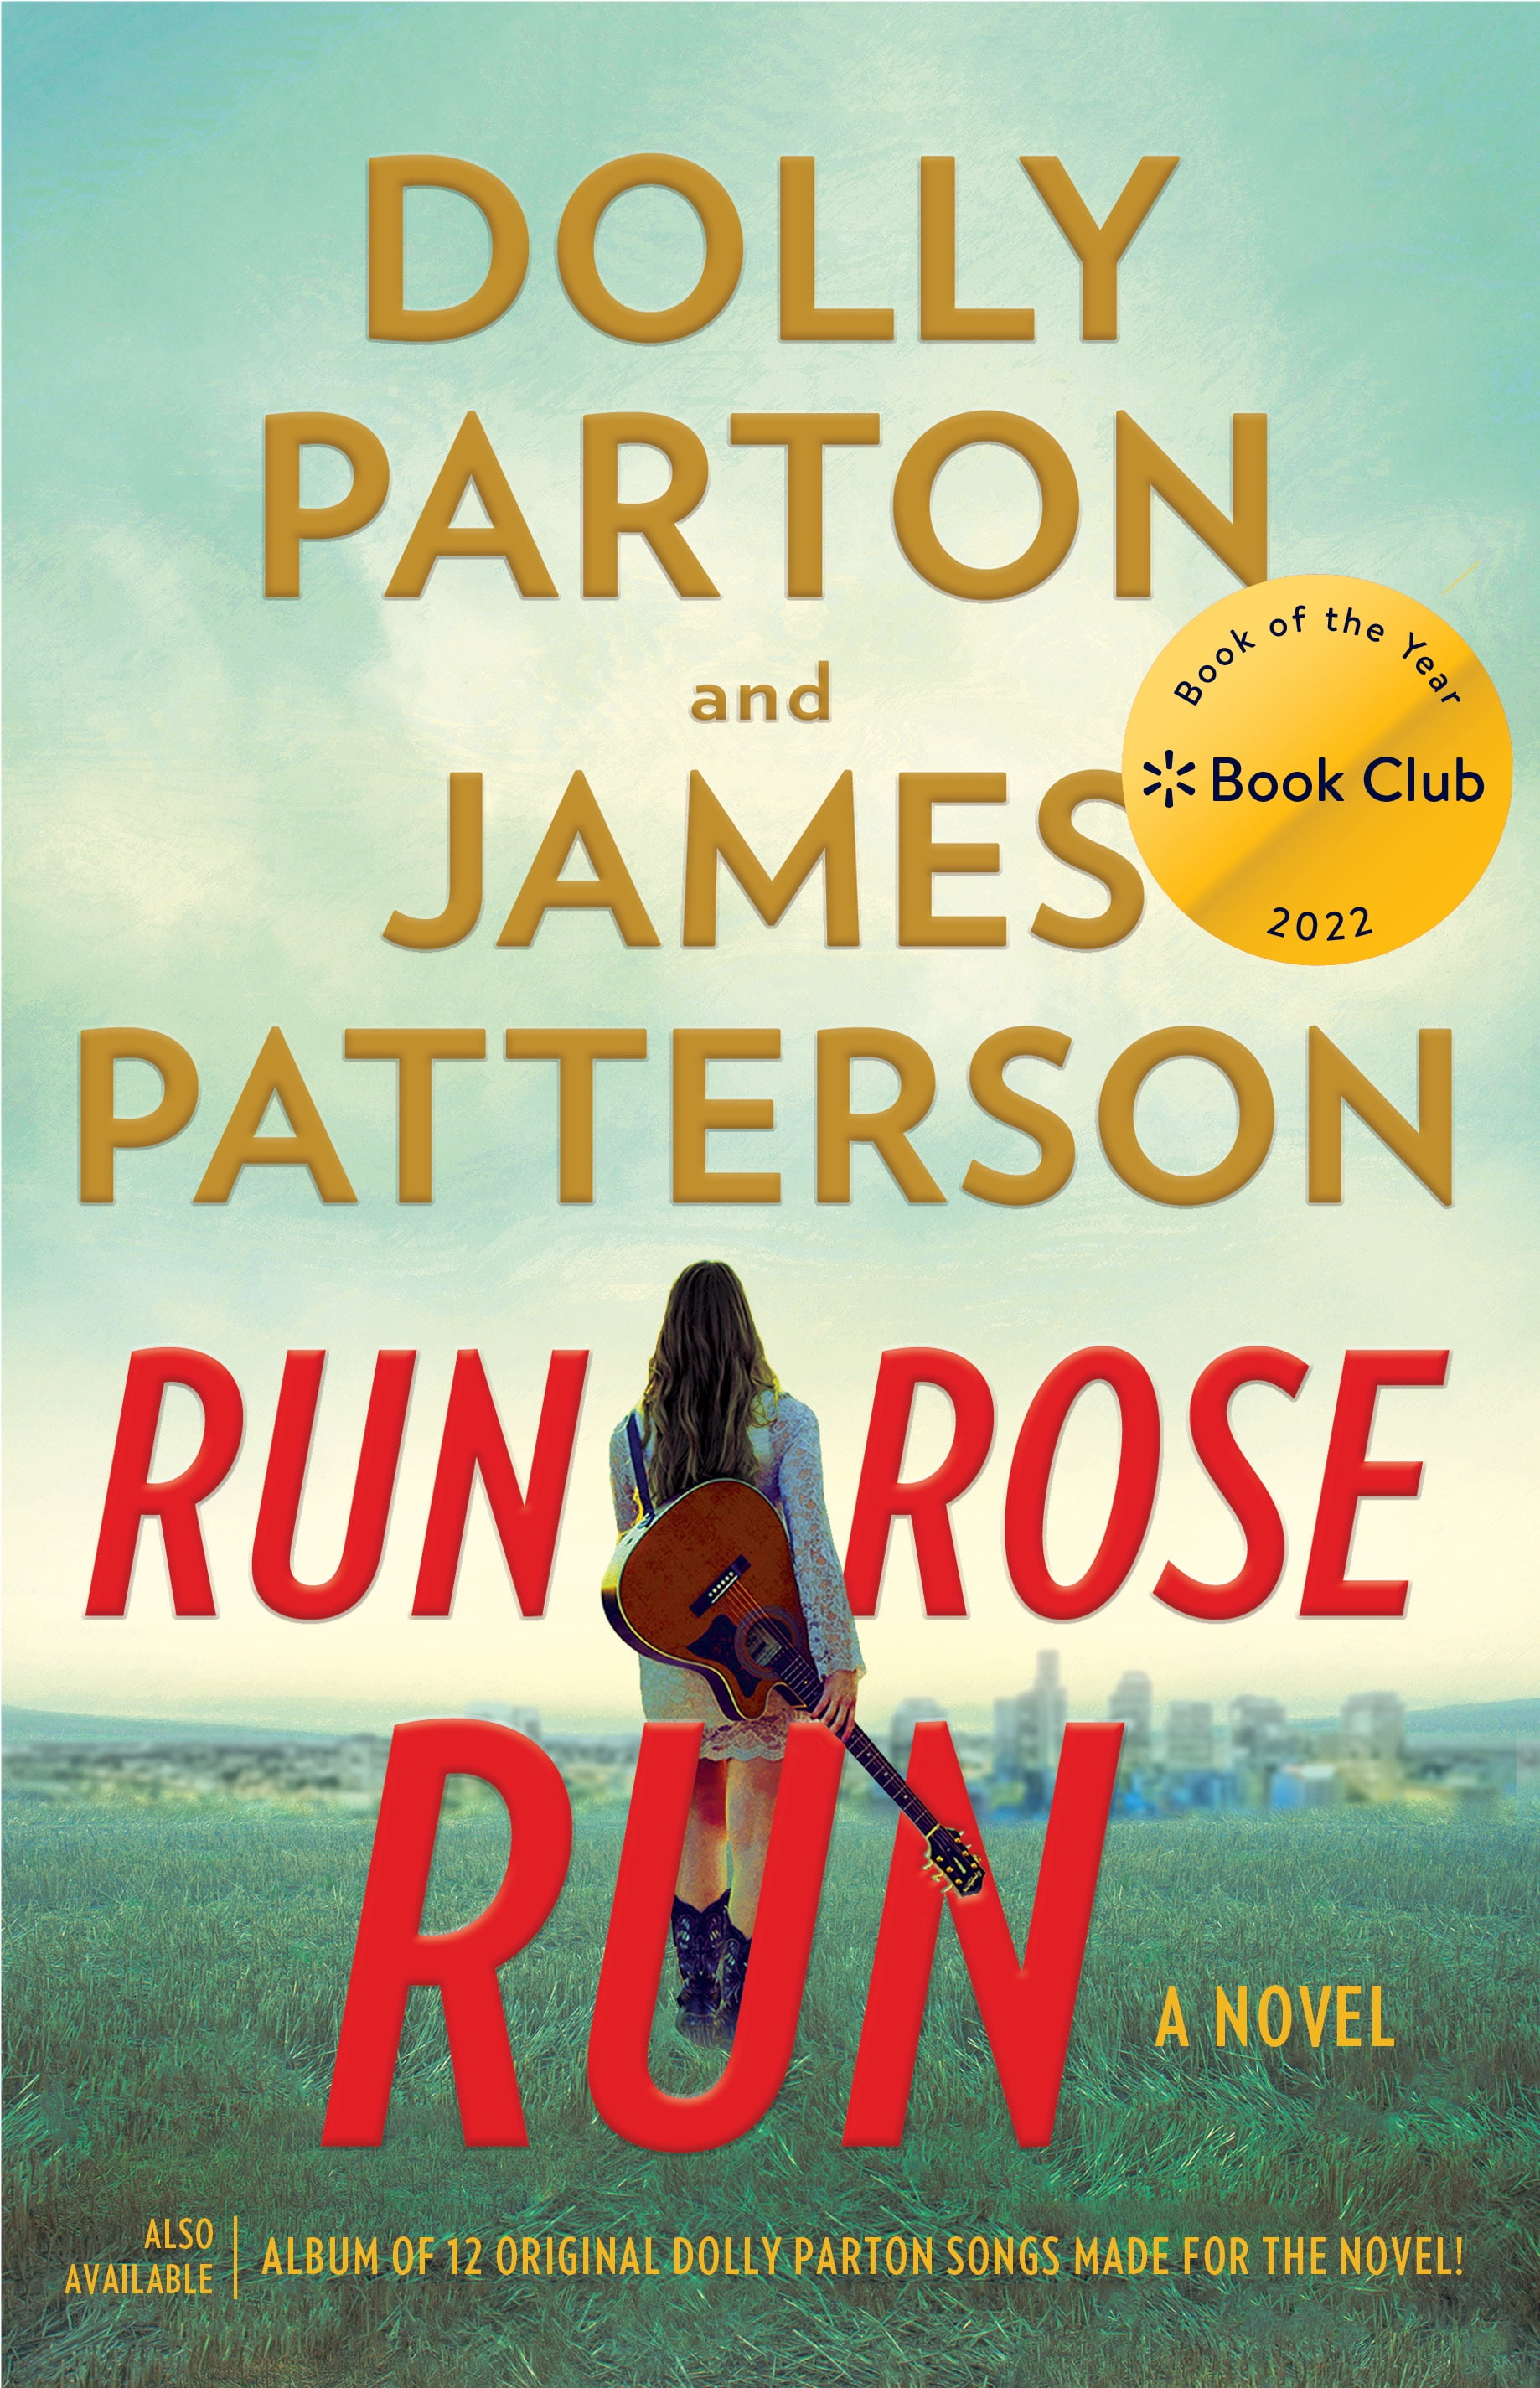 Run Rose Run by James Patterson & Dolly Parton (Hardcover) (Walmart Book Club)